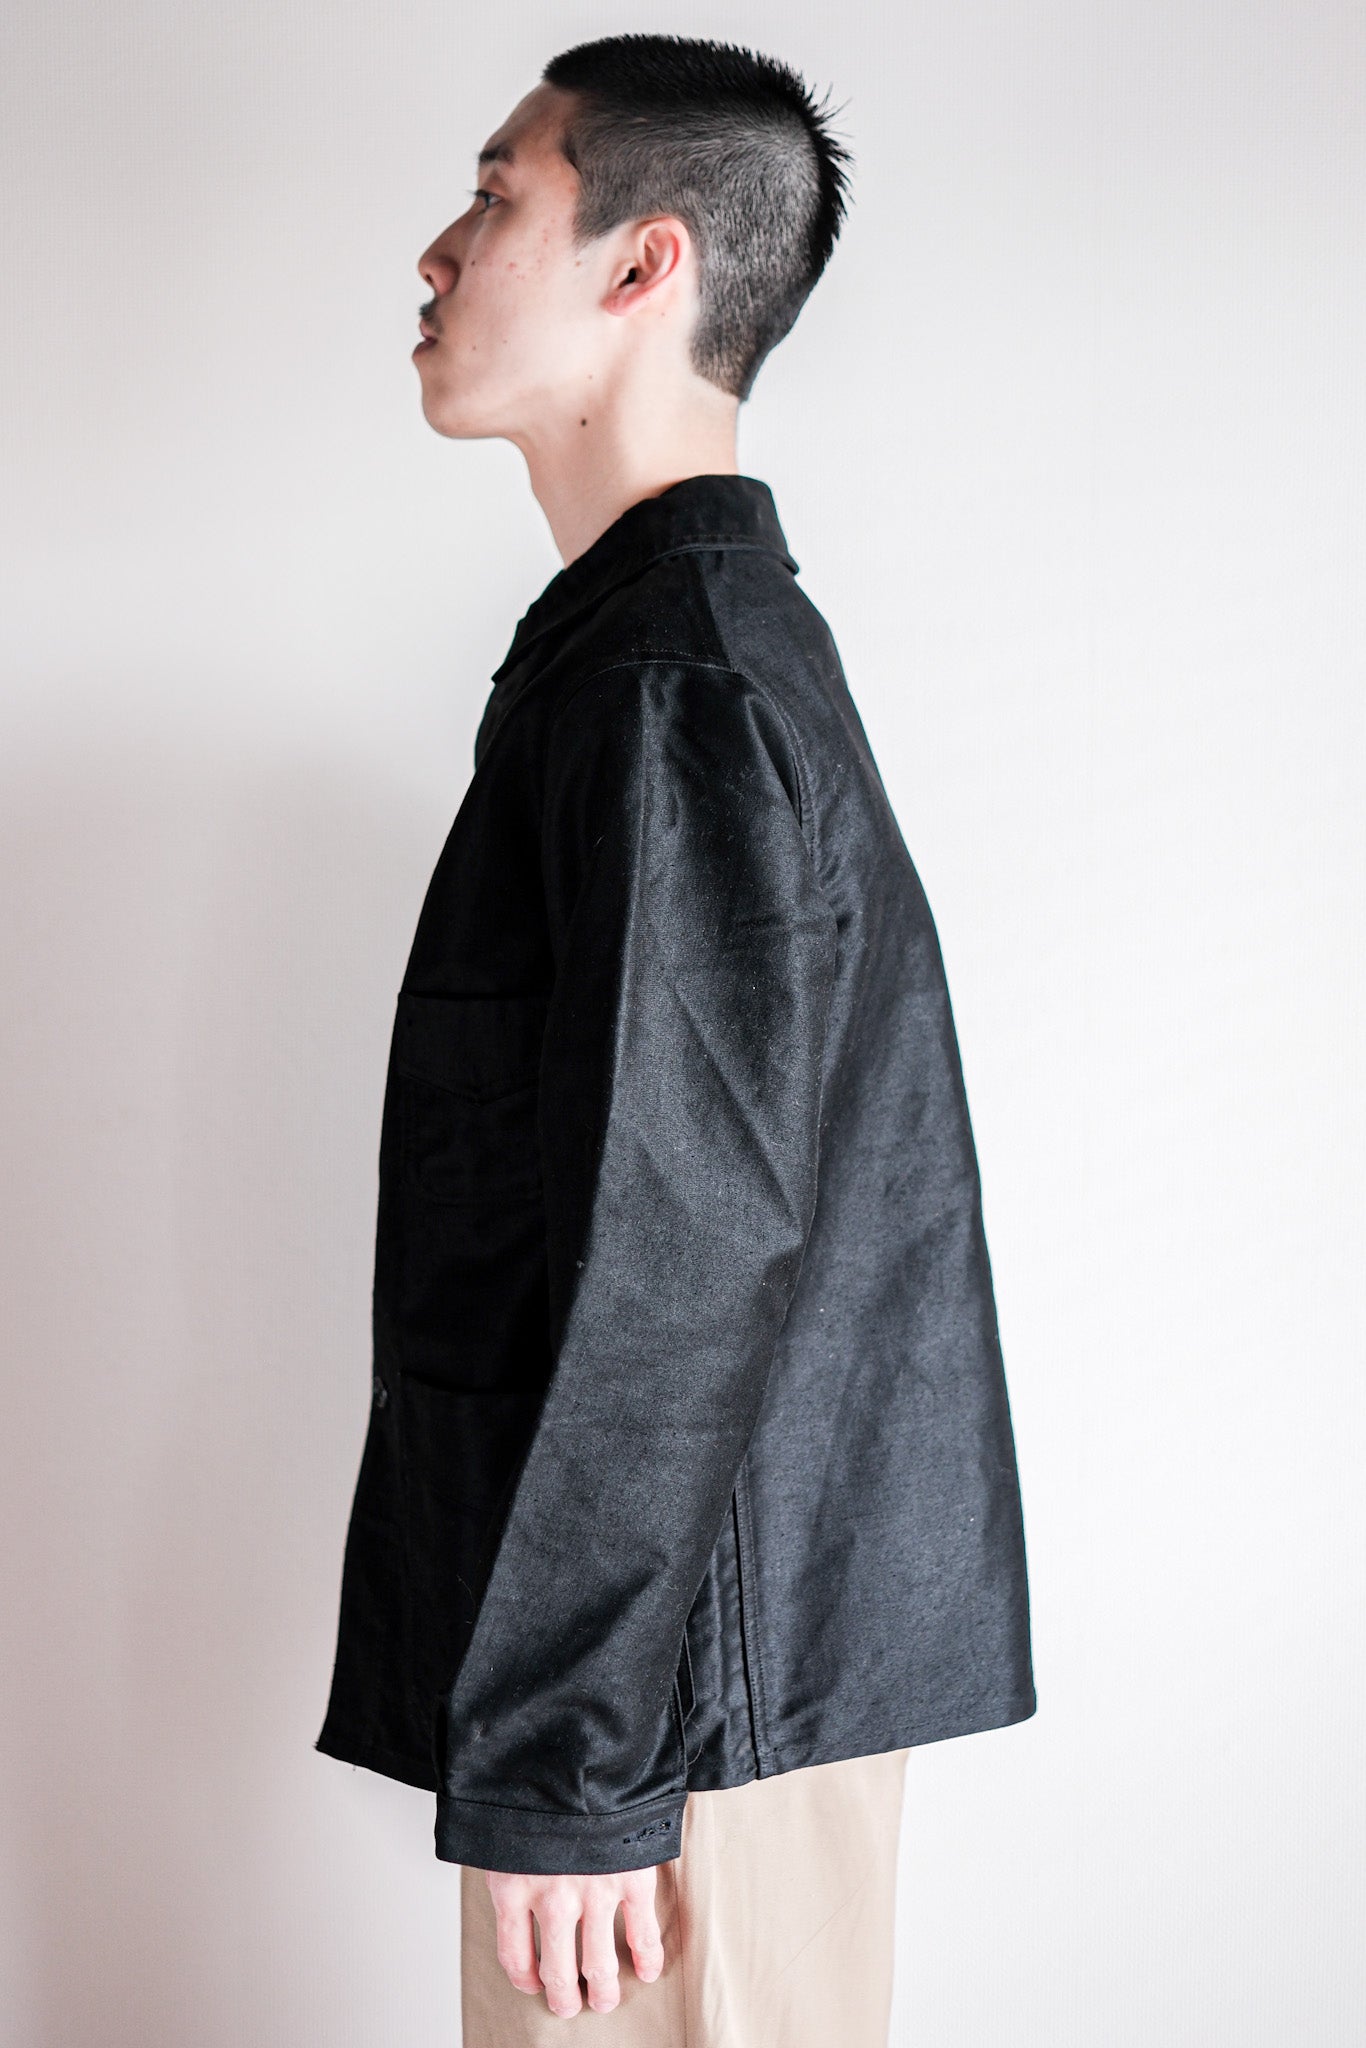 [~ 50's] French Vintage Black Moleskin Work Jacket "Dead Stock"